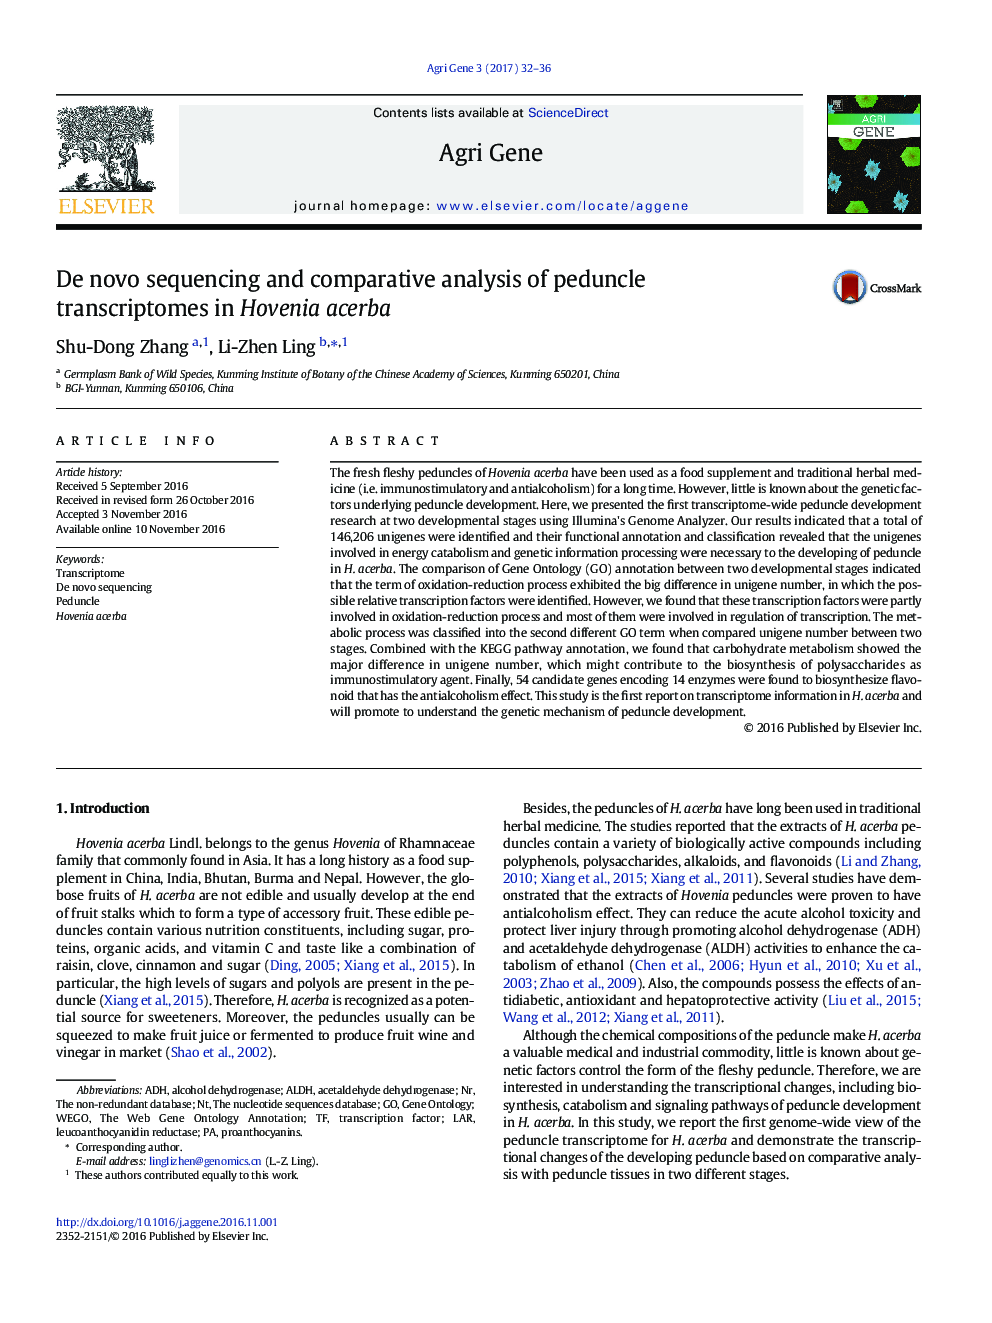 De novo sequencing and comparative analysis of peduncle transcriptomes in Hovenia acerba